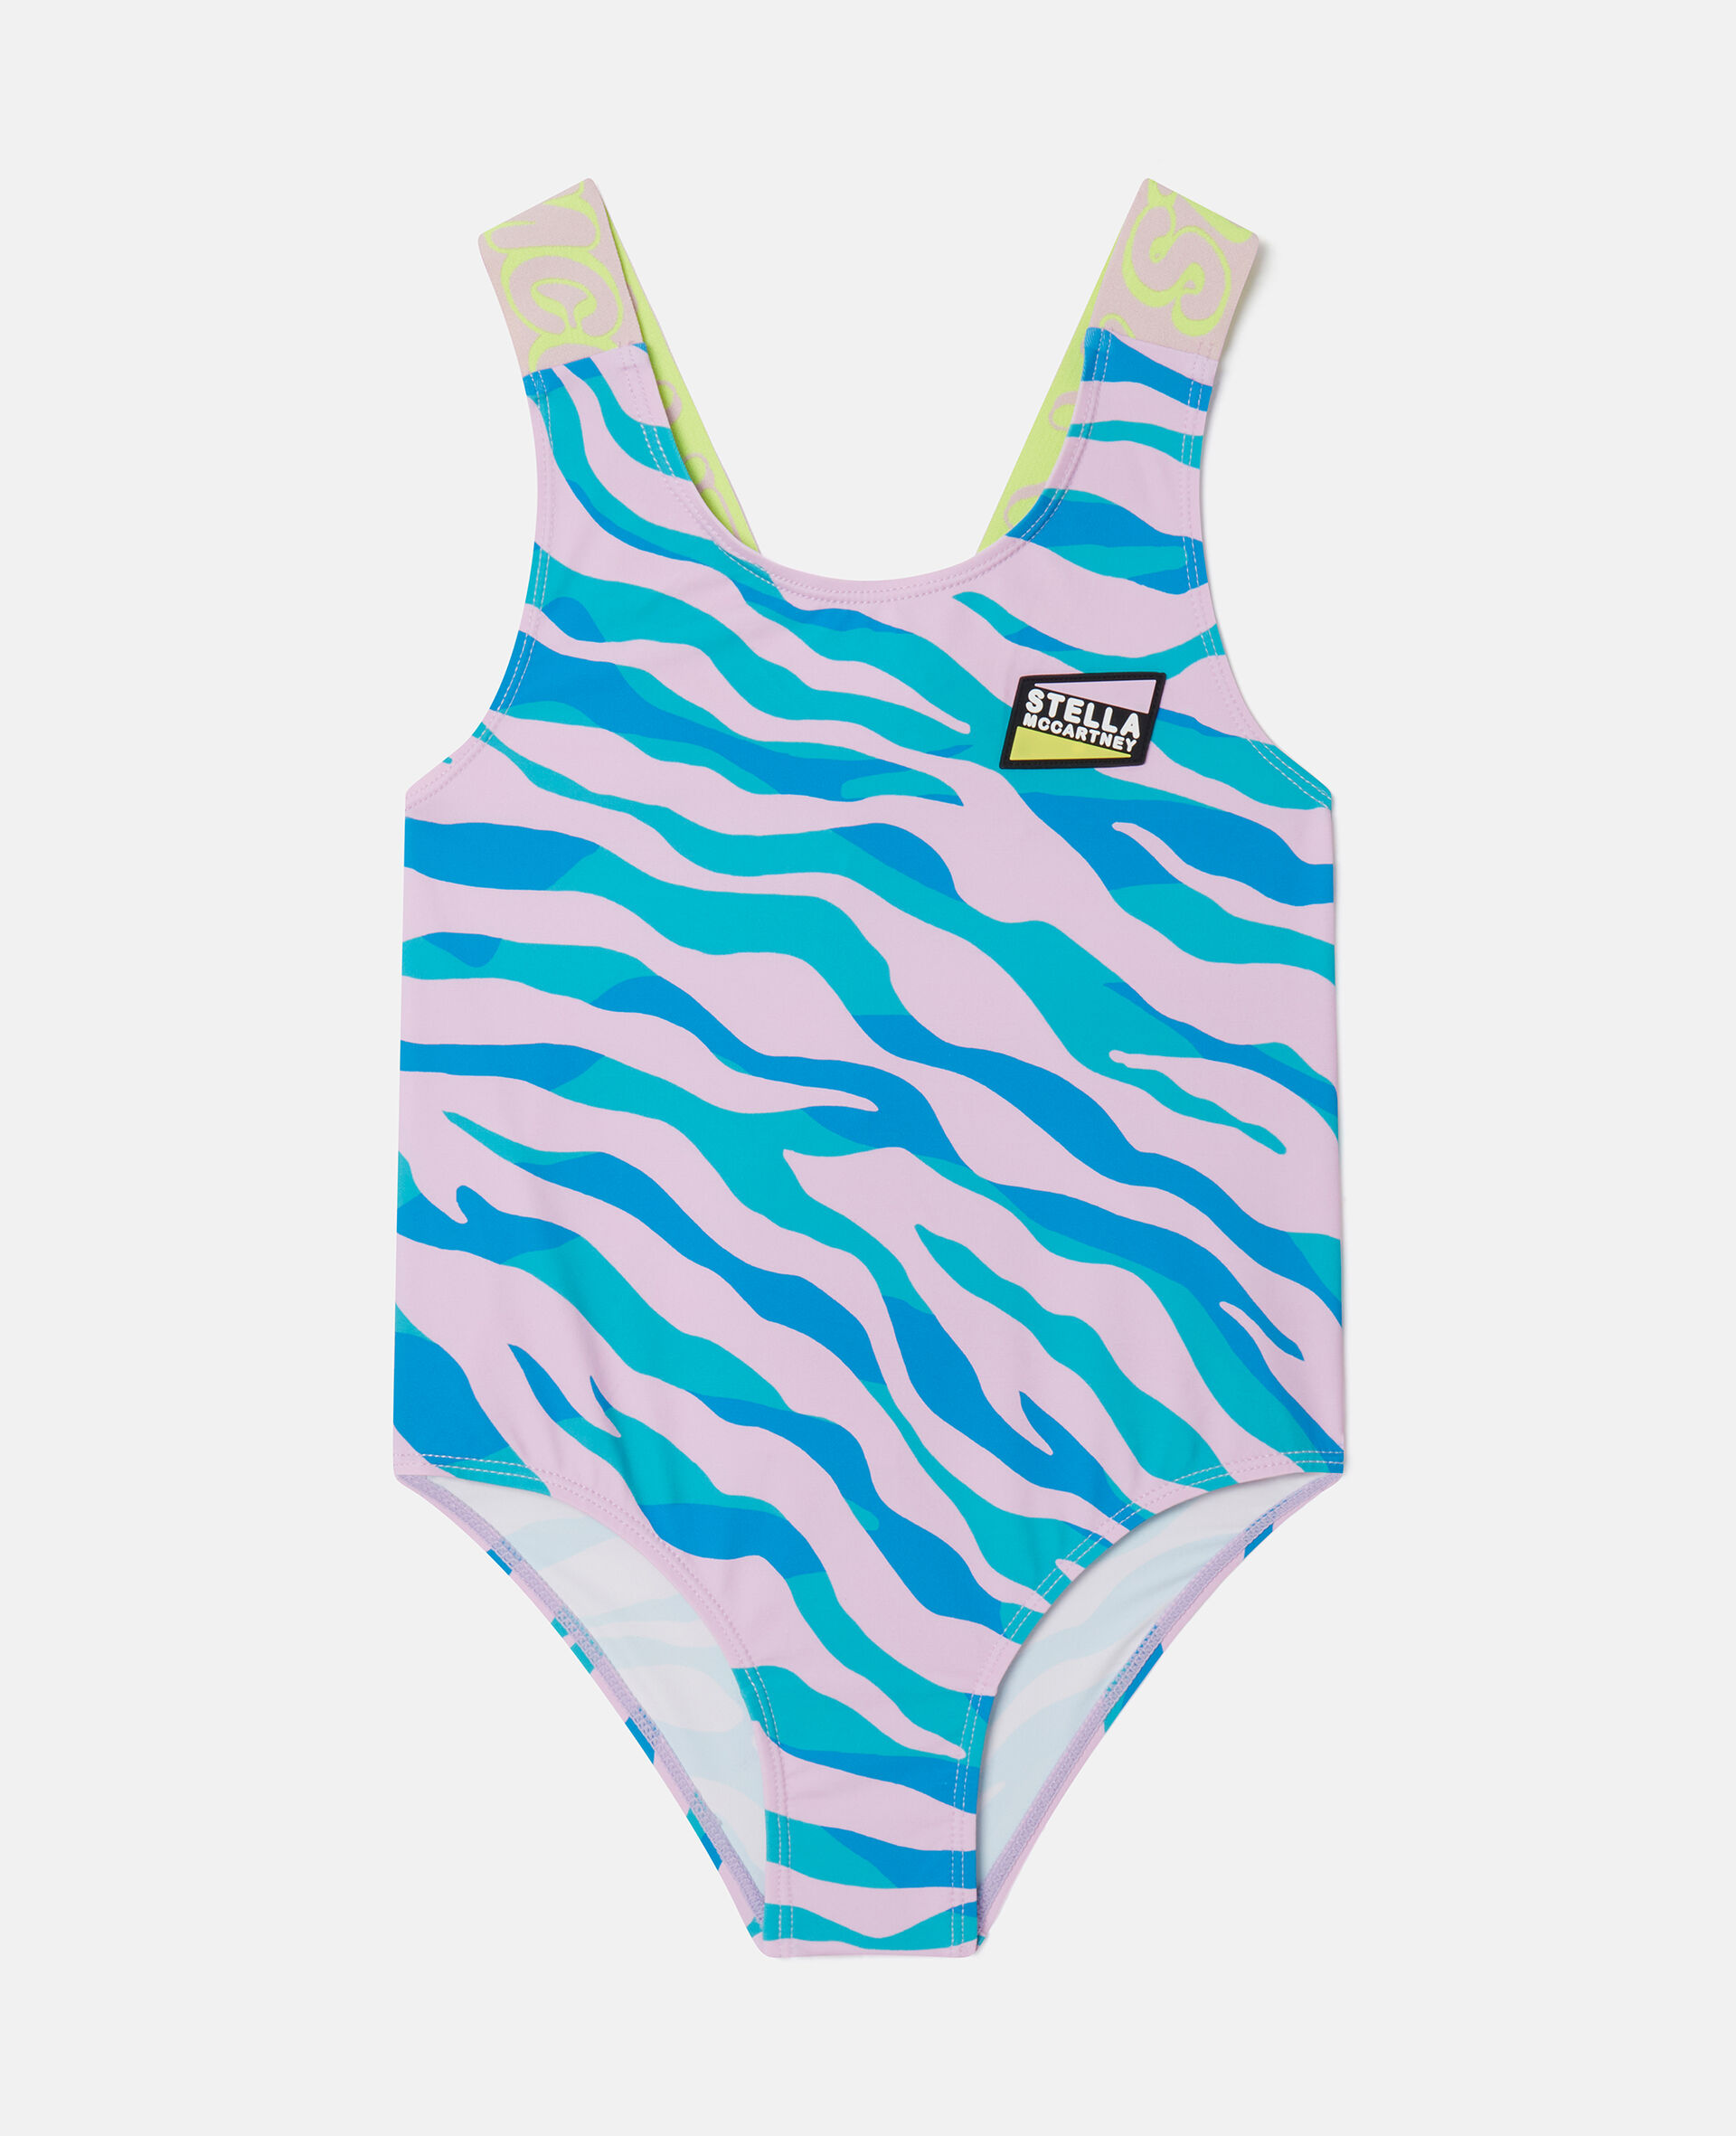 Zebra Print Swimsuit-Fantaisie-large image number 0